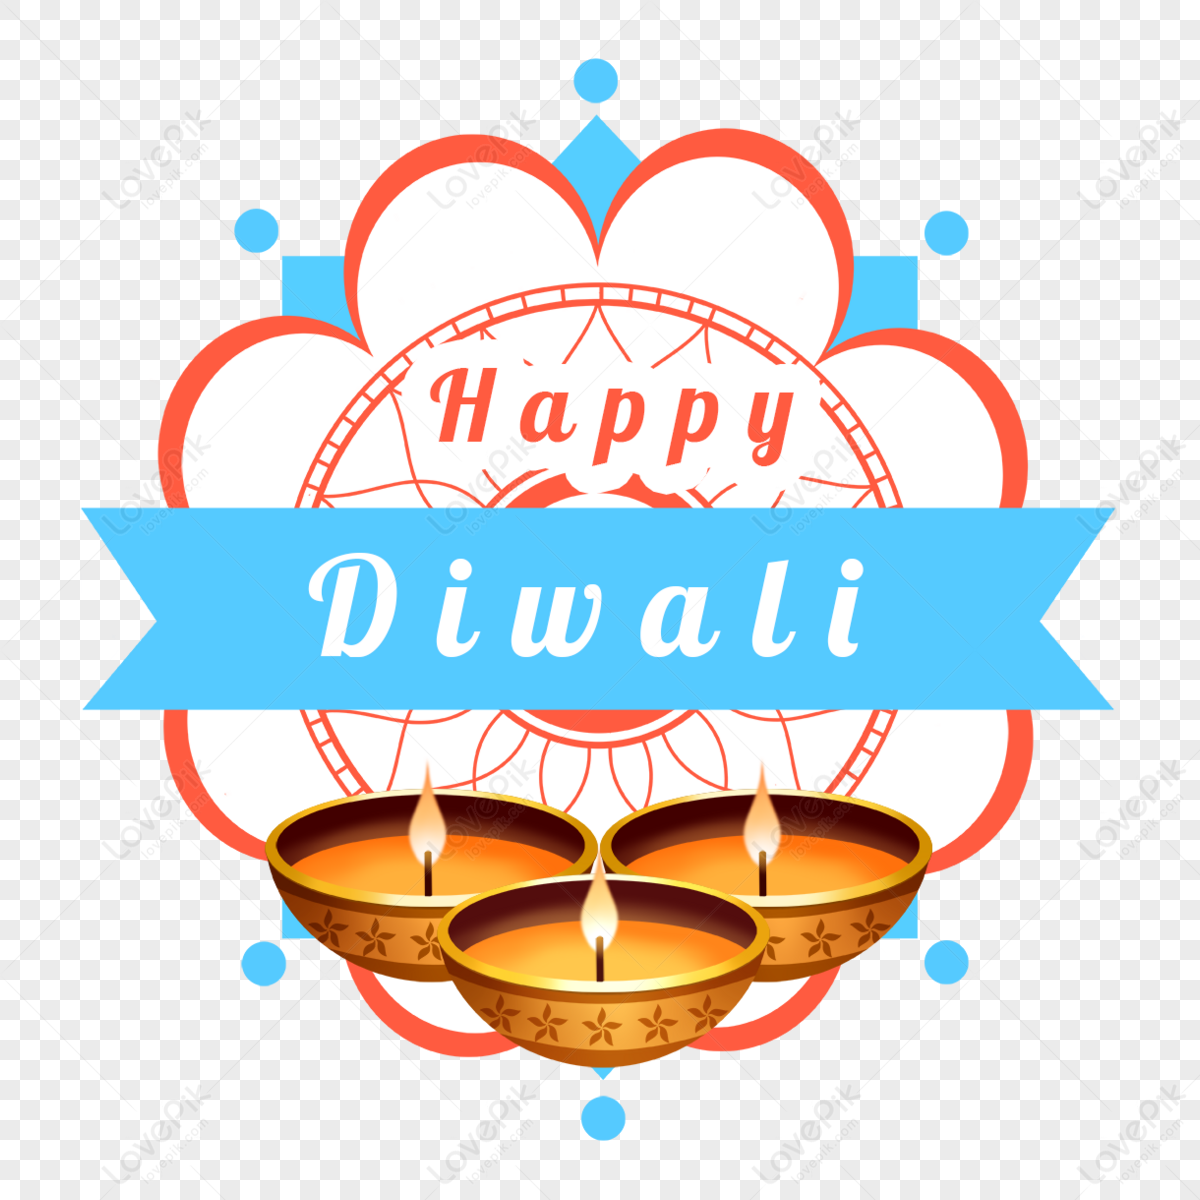 Diwali Celebration Images, HD Pictures For Free Vectors Download ...